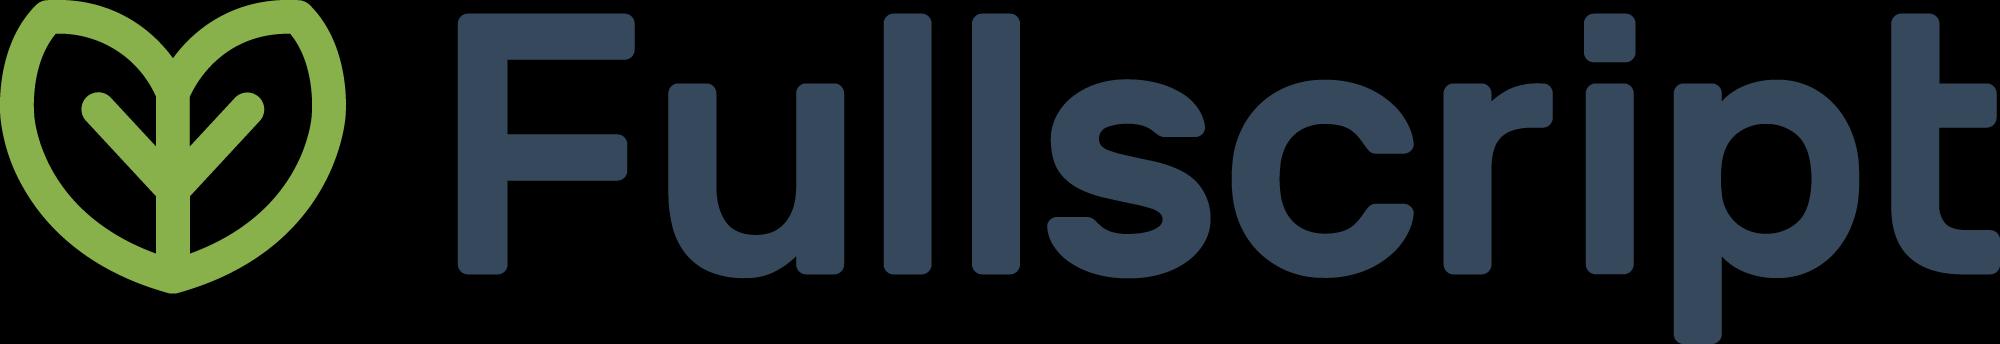 Fullscript_logo